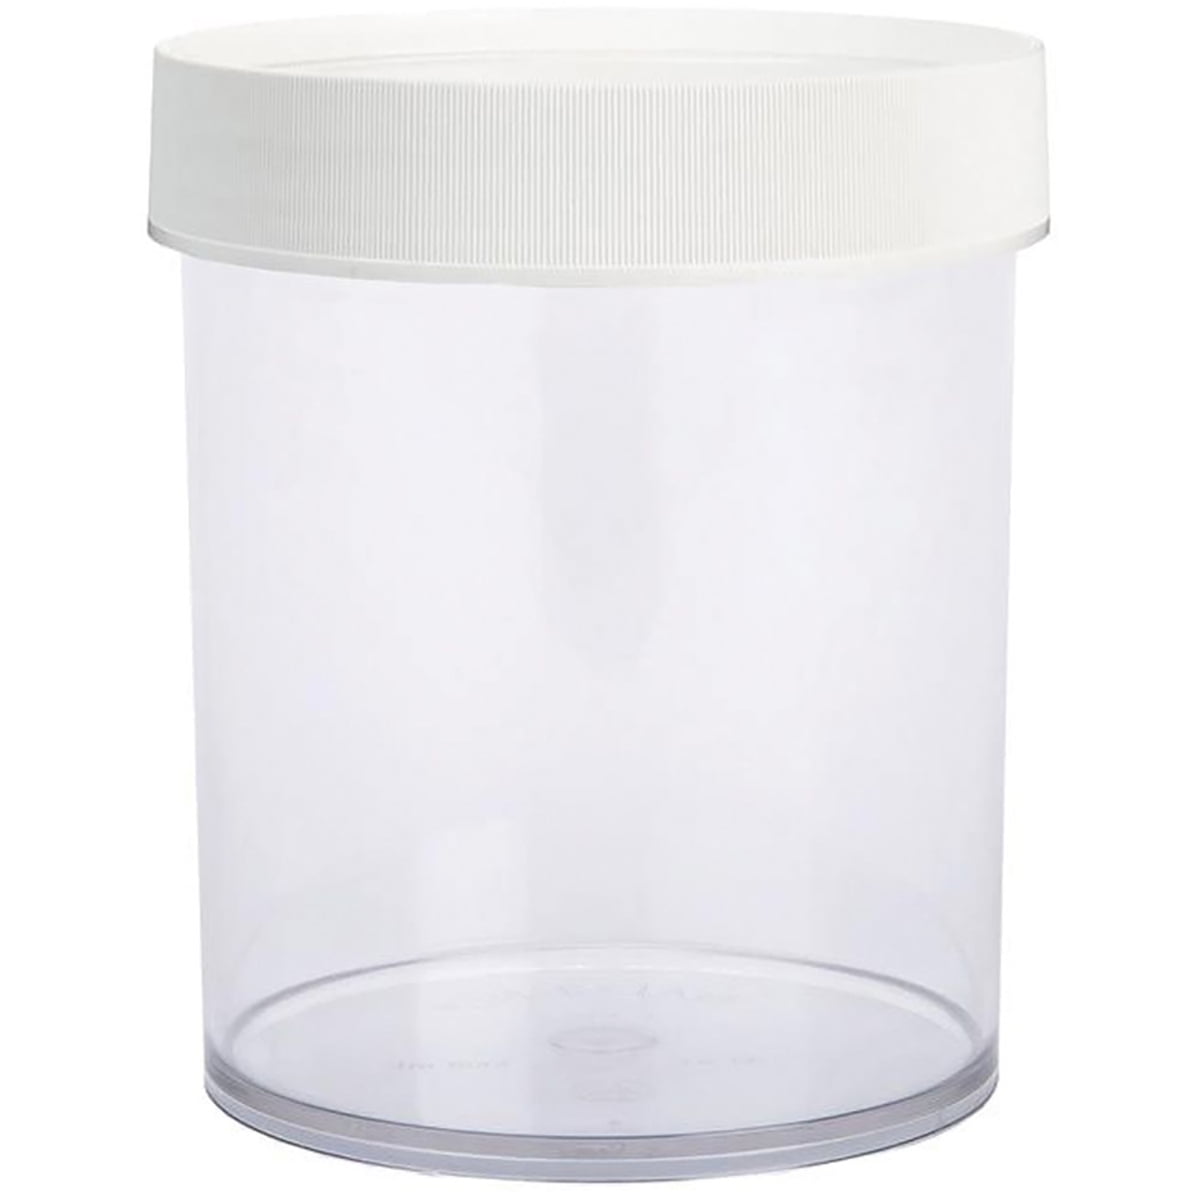 WUWEOT 12 Pack Clear Plastic Jars, 8 Oz Leakproof Kitchen Storage